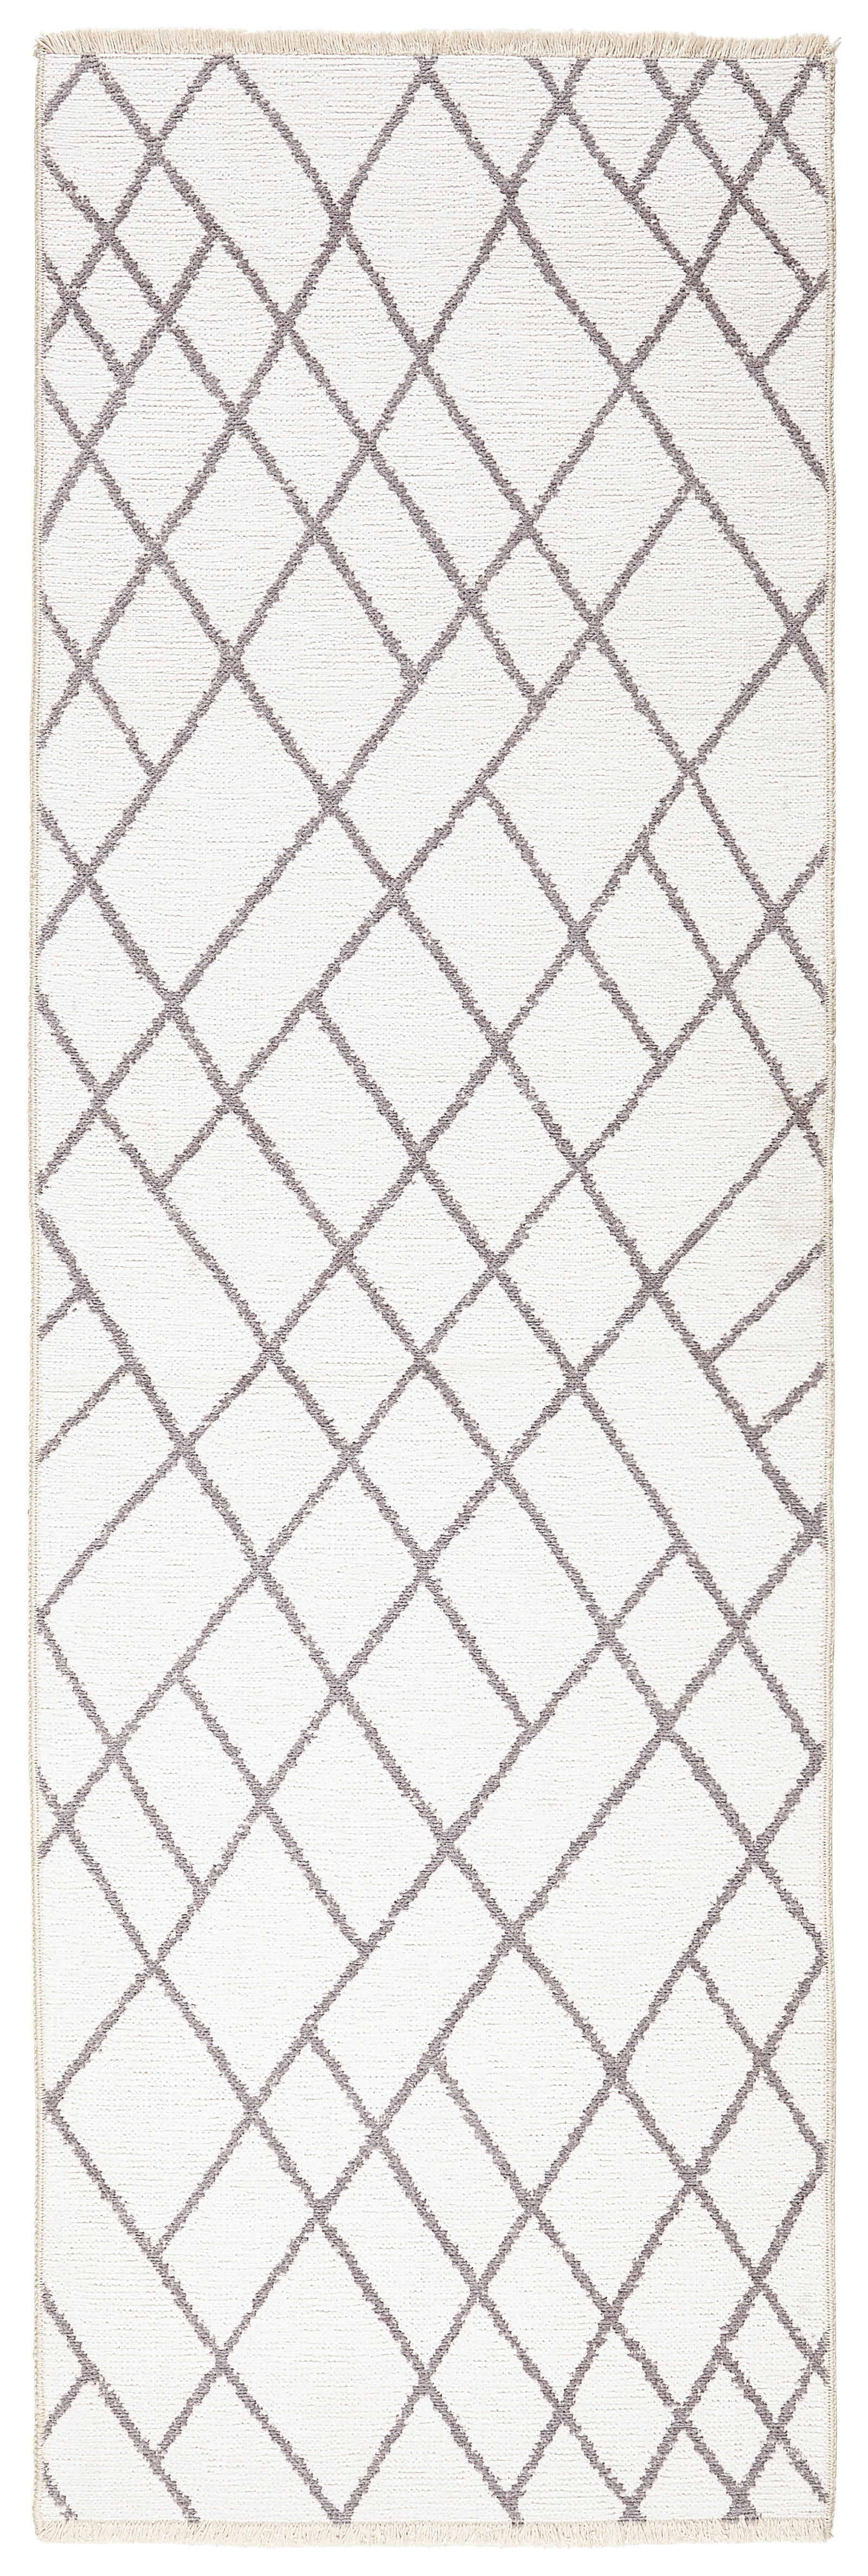 WENDETEPPICH  80/250 cm  Grau, Weiß  - Weiß/Grau, Design, Textil (80/250cm) - Novel